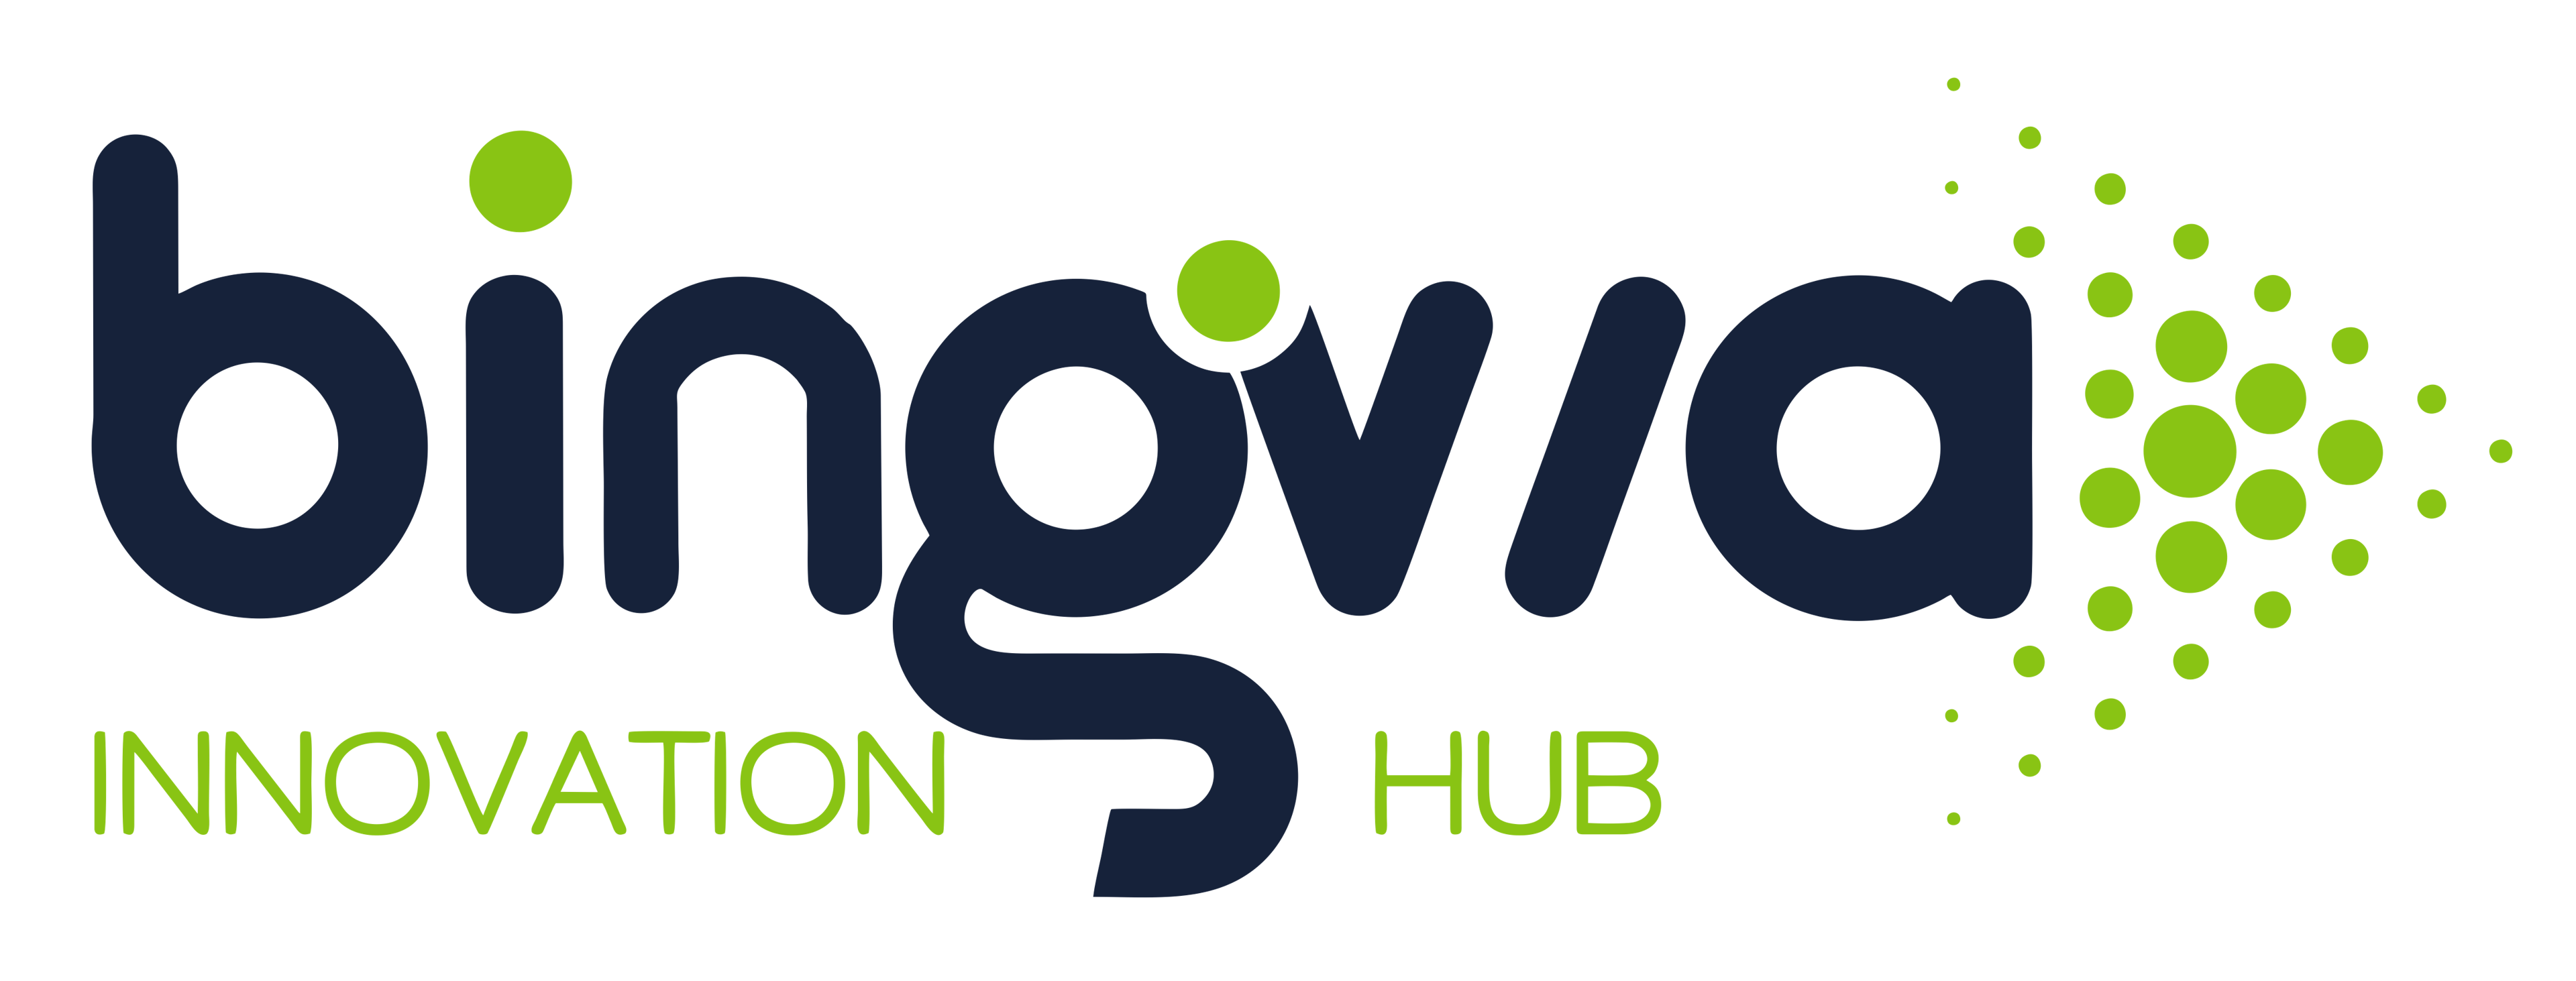 bingwa inovation hub logo